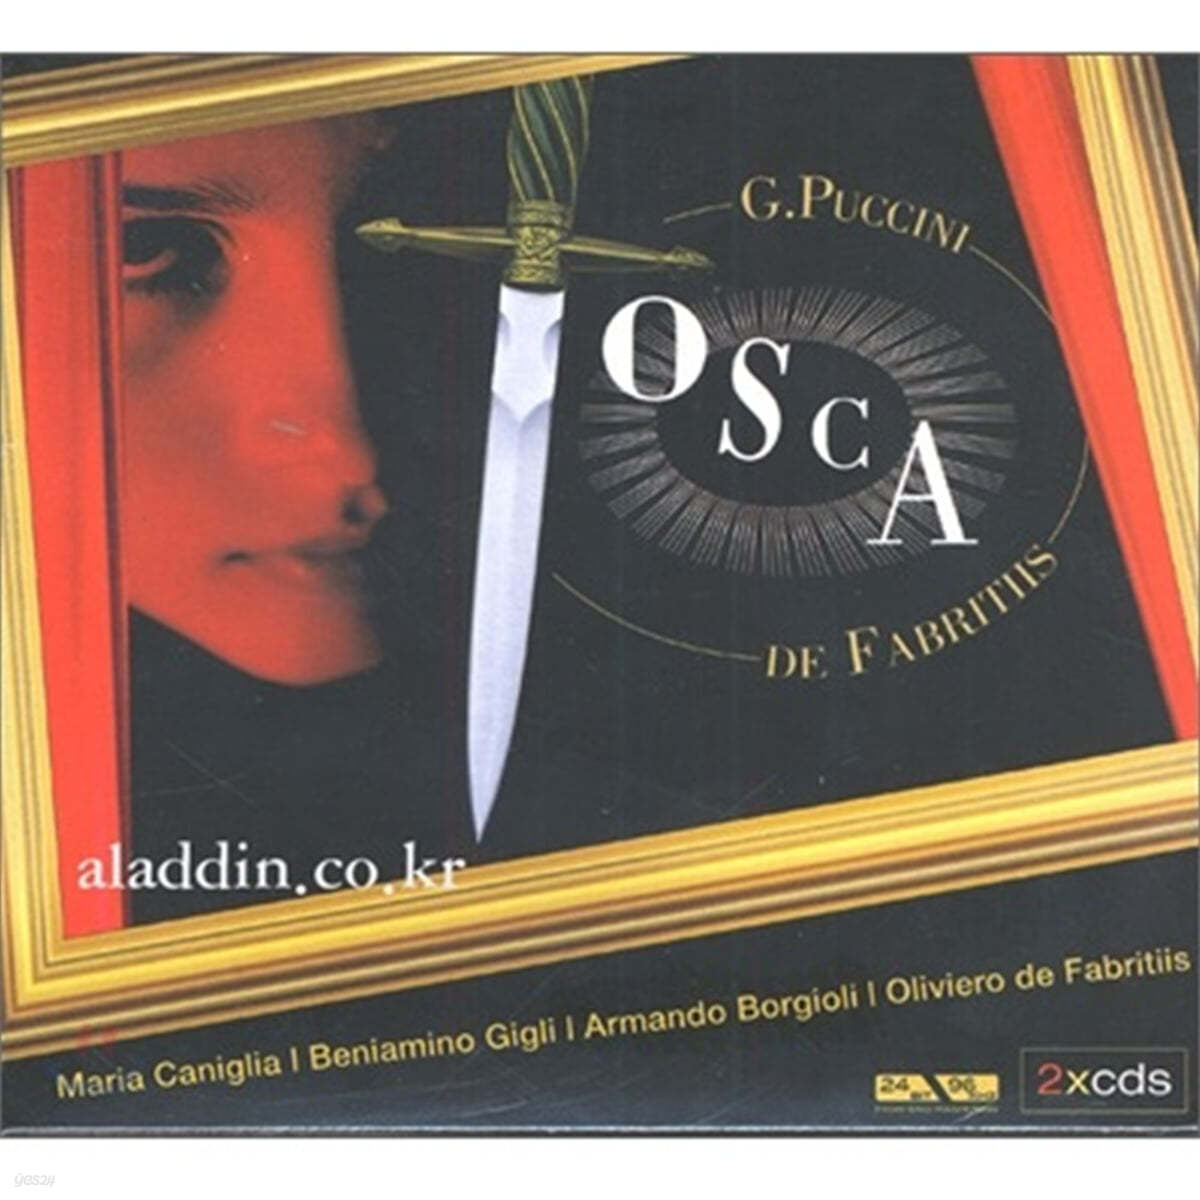 Maria Caniglia  푸치니: 토스카 (Puccini : Tosca) 